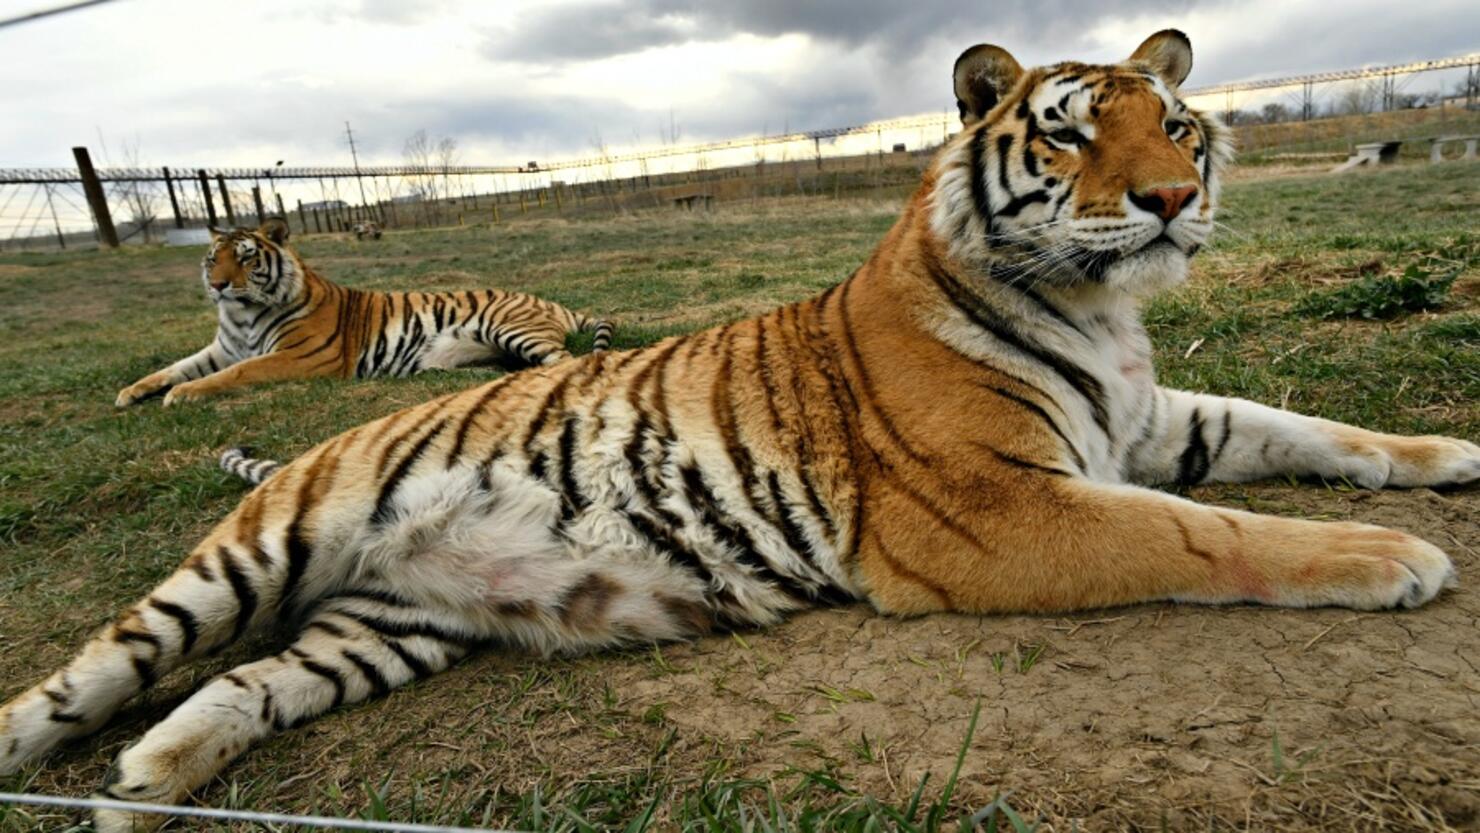 Tigers rescued  from Joe Exotic aka The Tiger King Joe